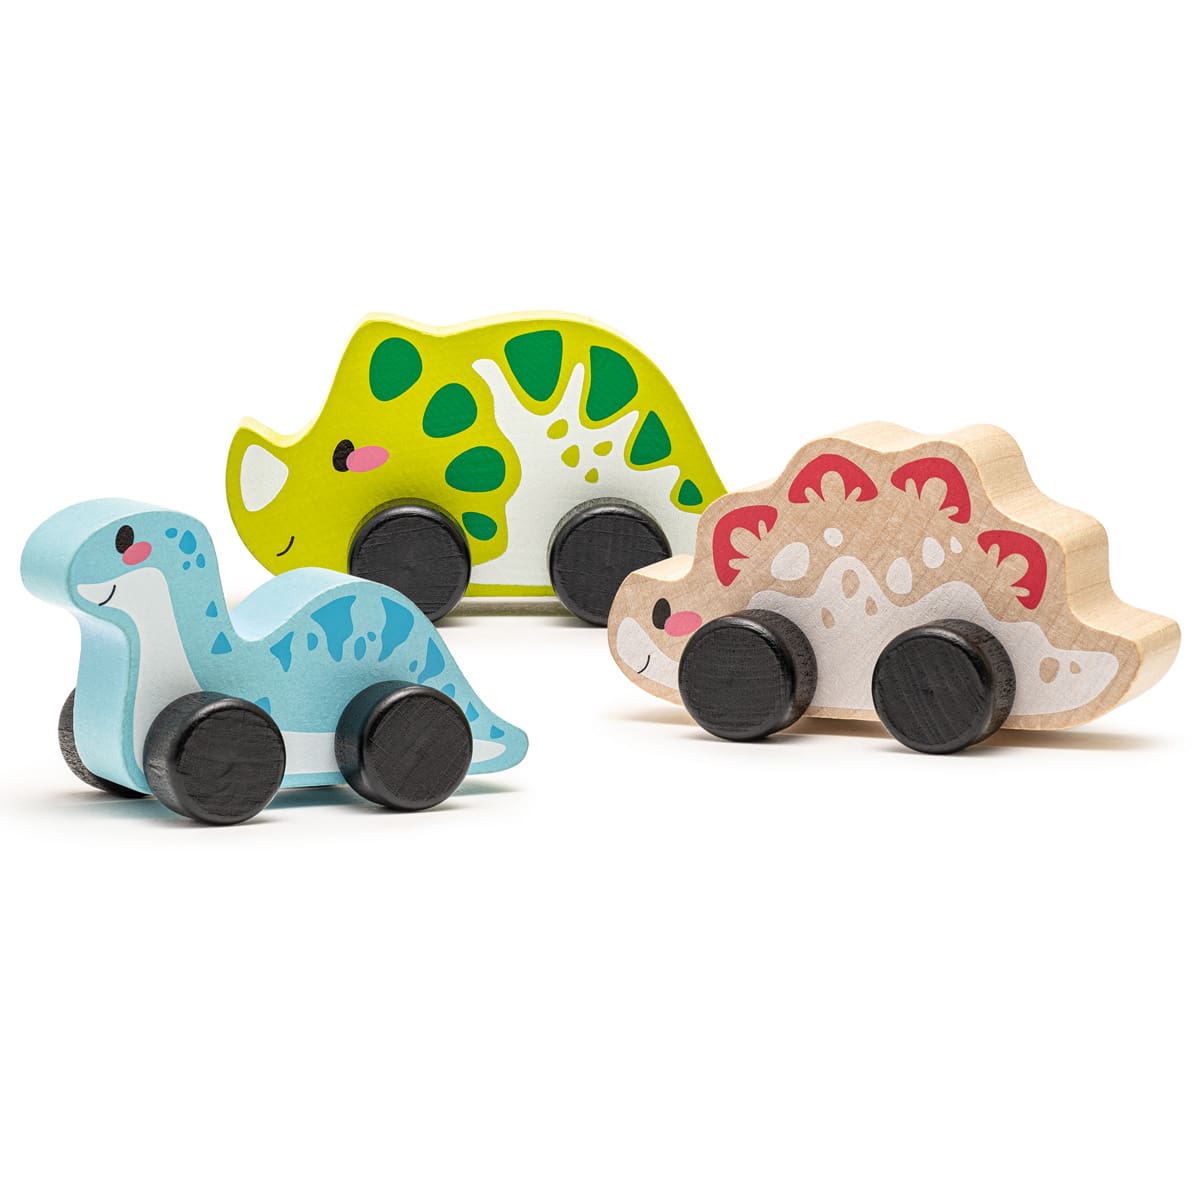 Holzspielzeugset Dinosaurier 3er Set Dinos Holz Kinderspielzeug ab 18 Monaten - Spielzeug Opa